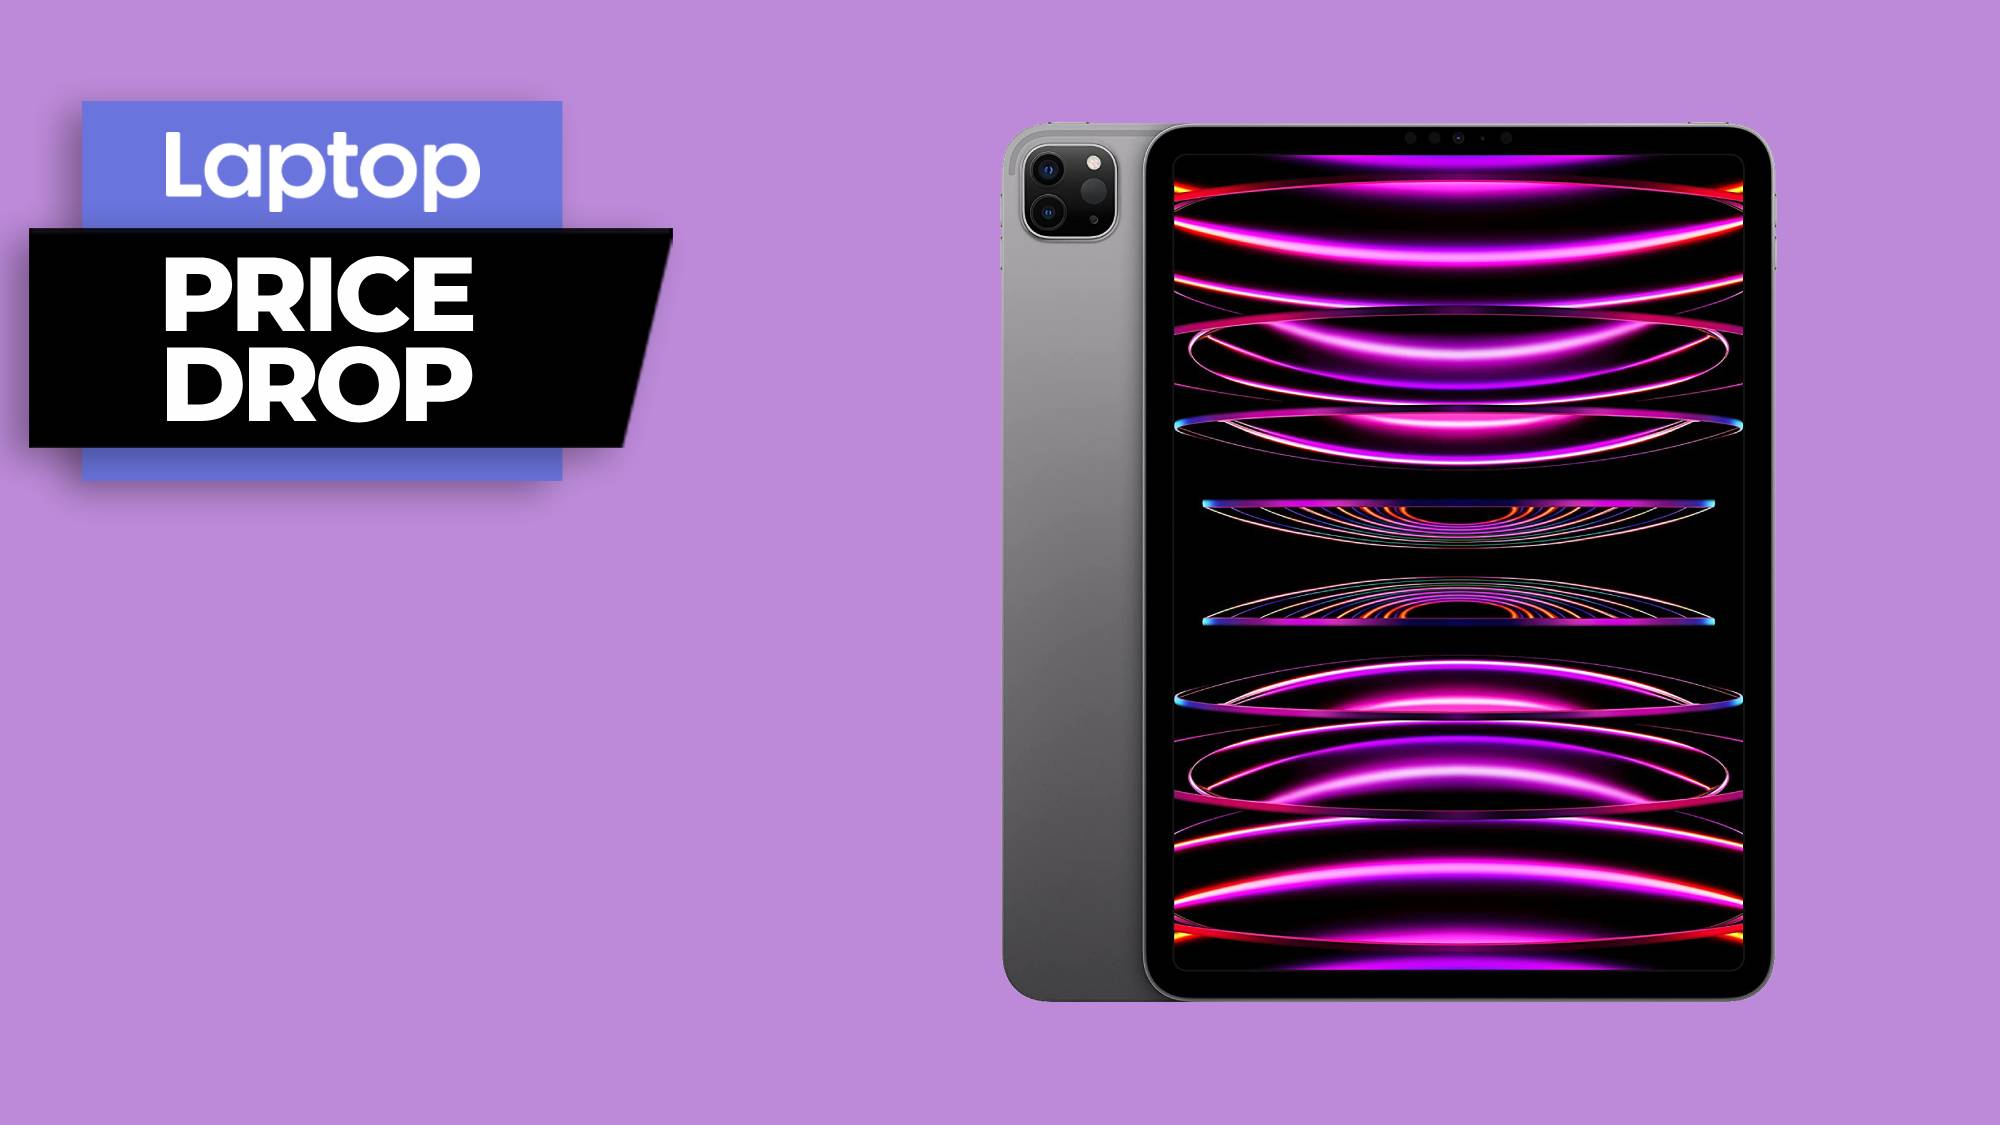 2022 iPad Pro in silver with purple and black design screensaver